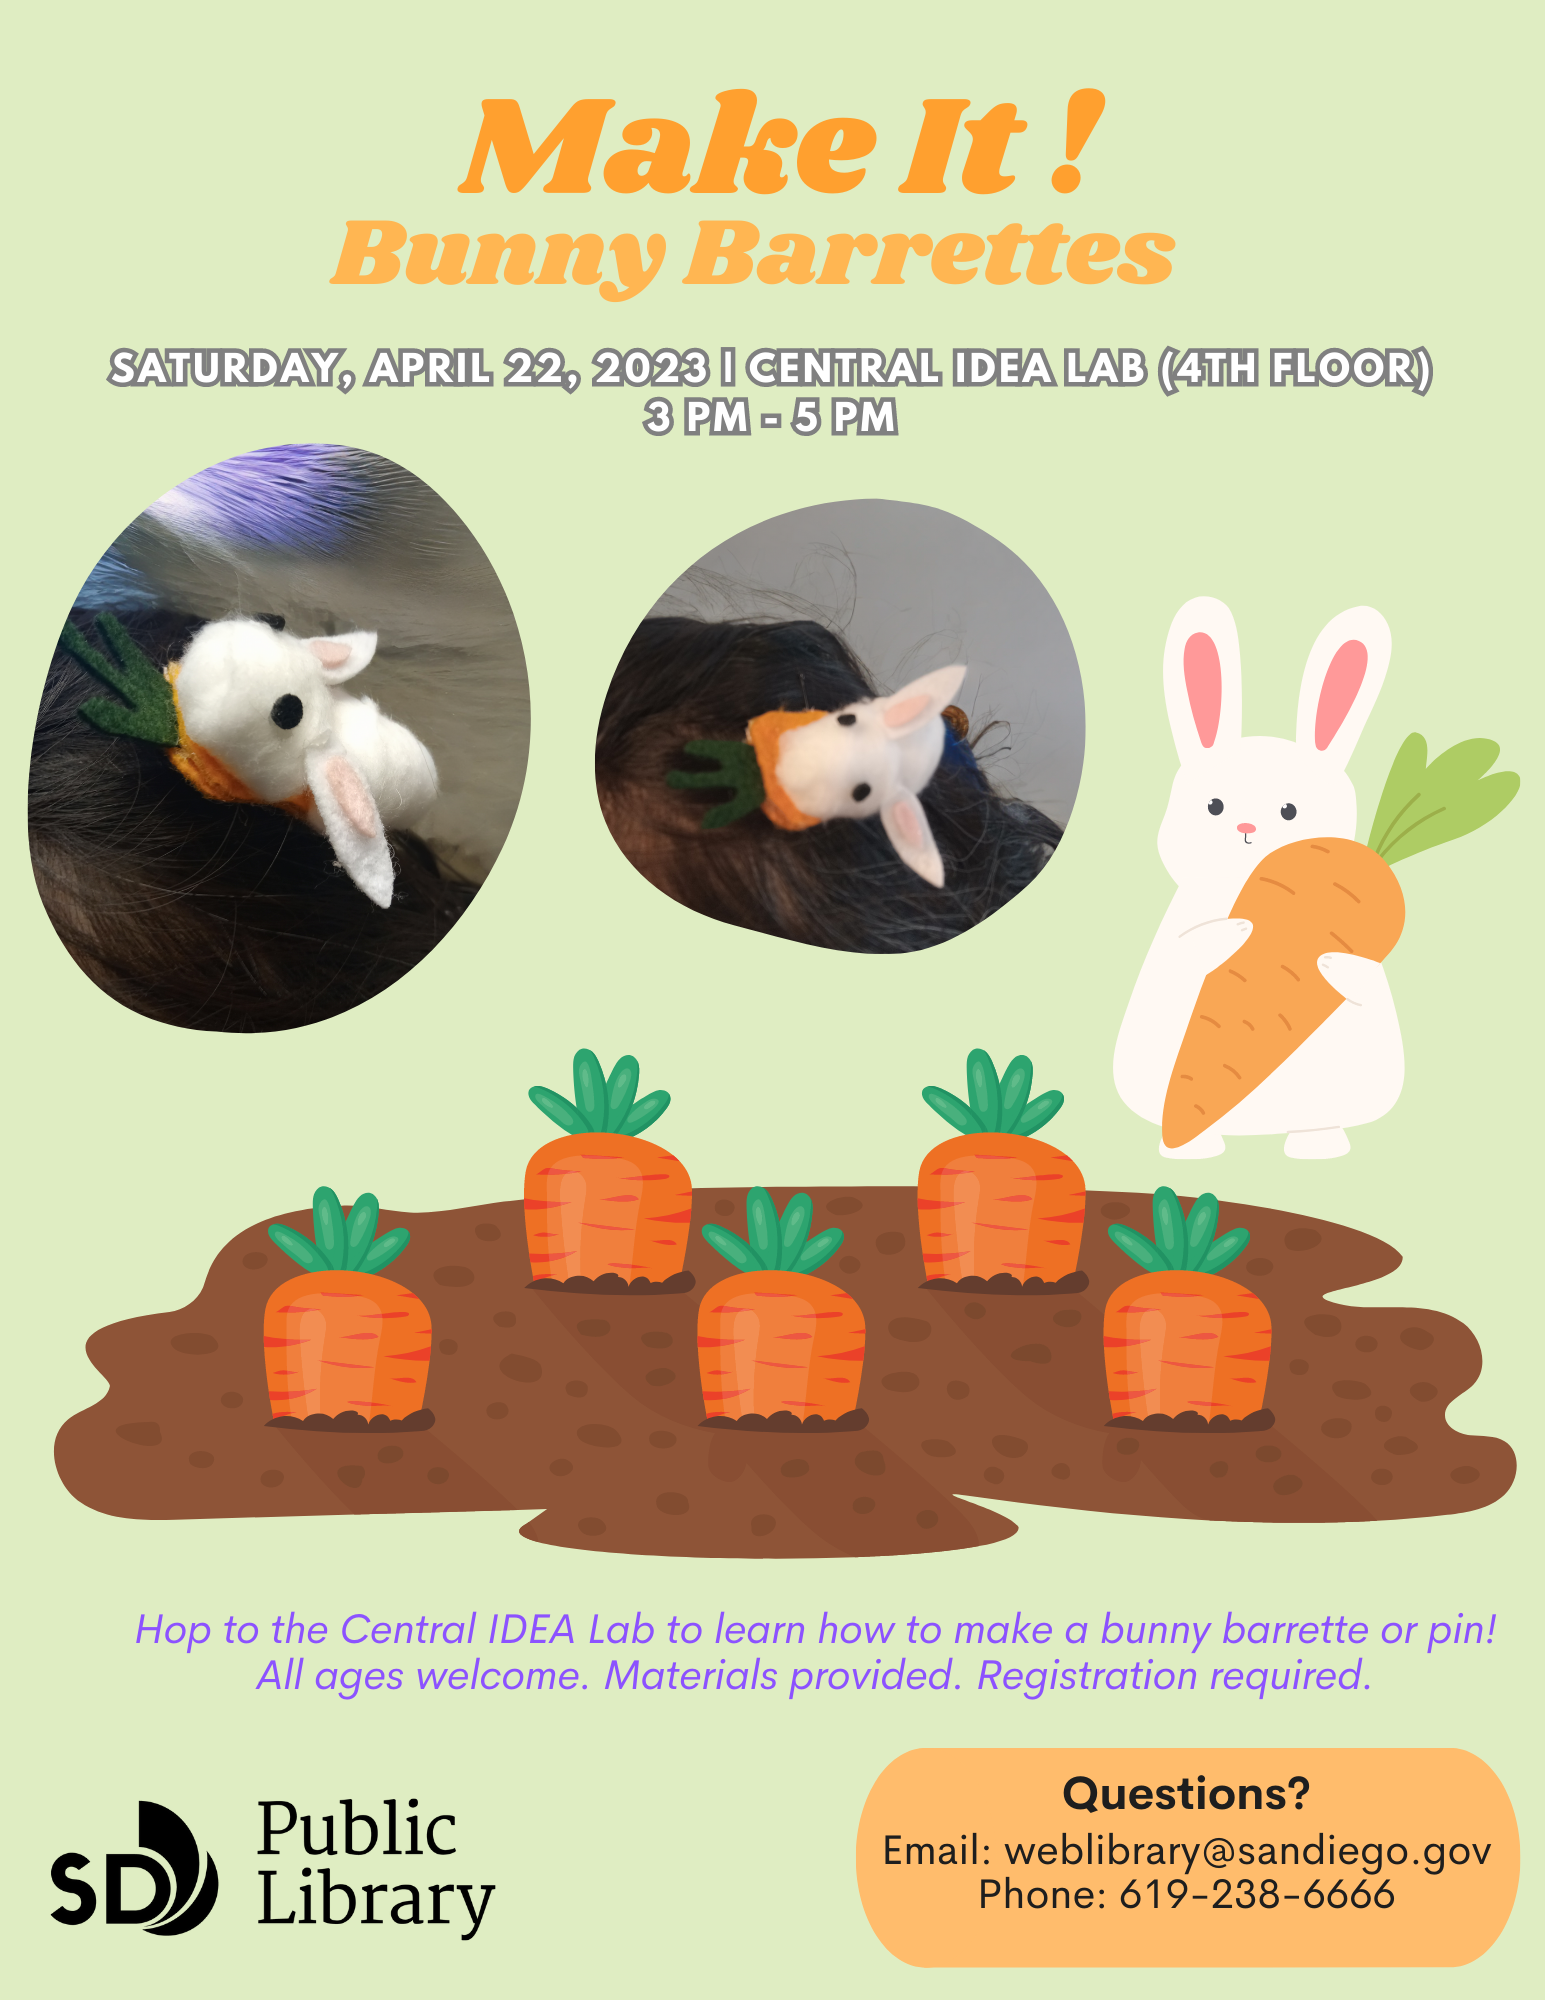 Cartoon bunny looking at close-up of pom-pom bunnies on felt carrots.